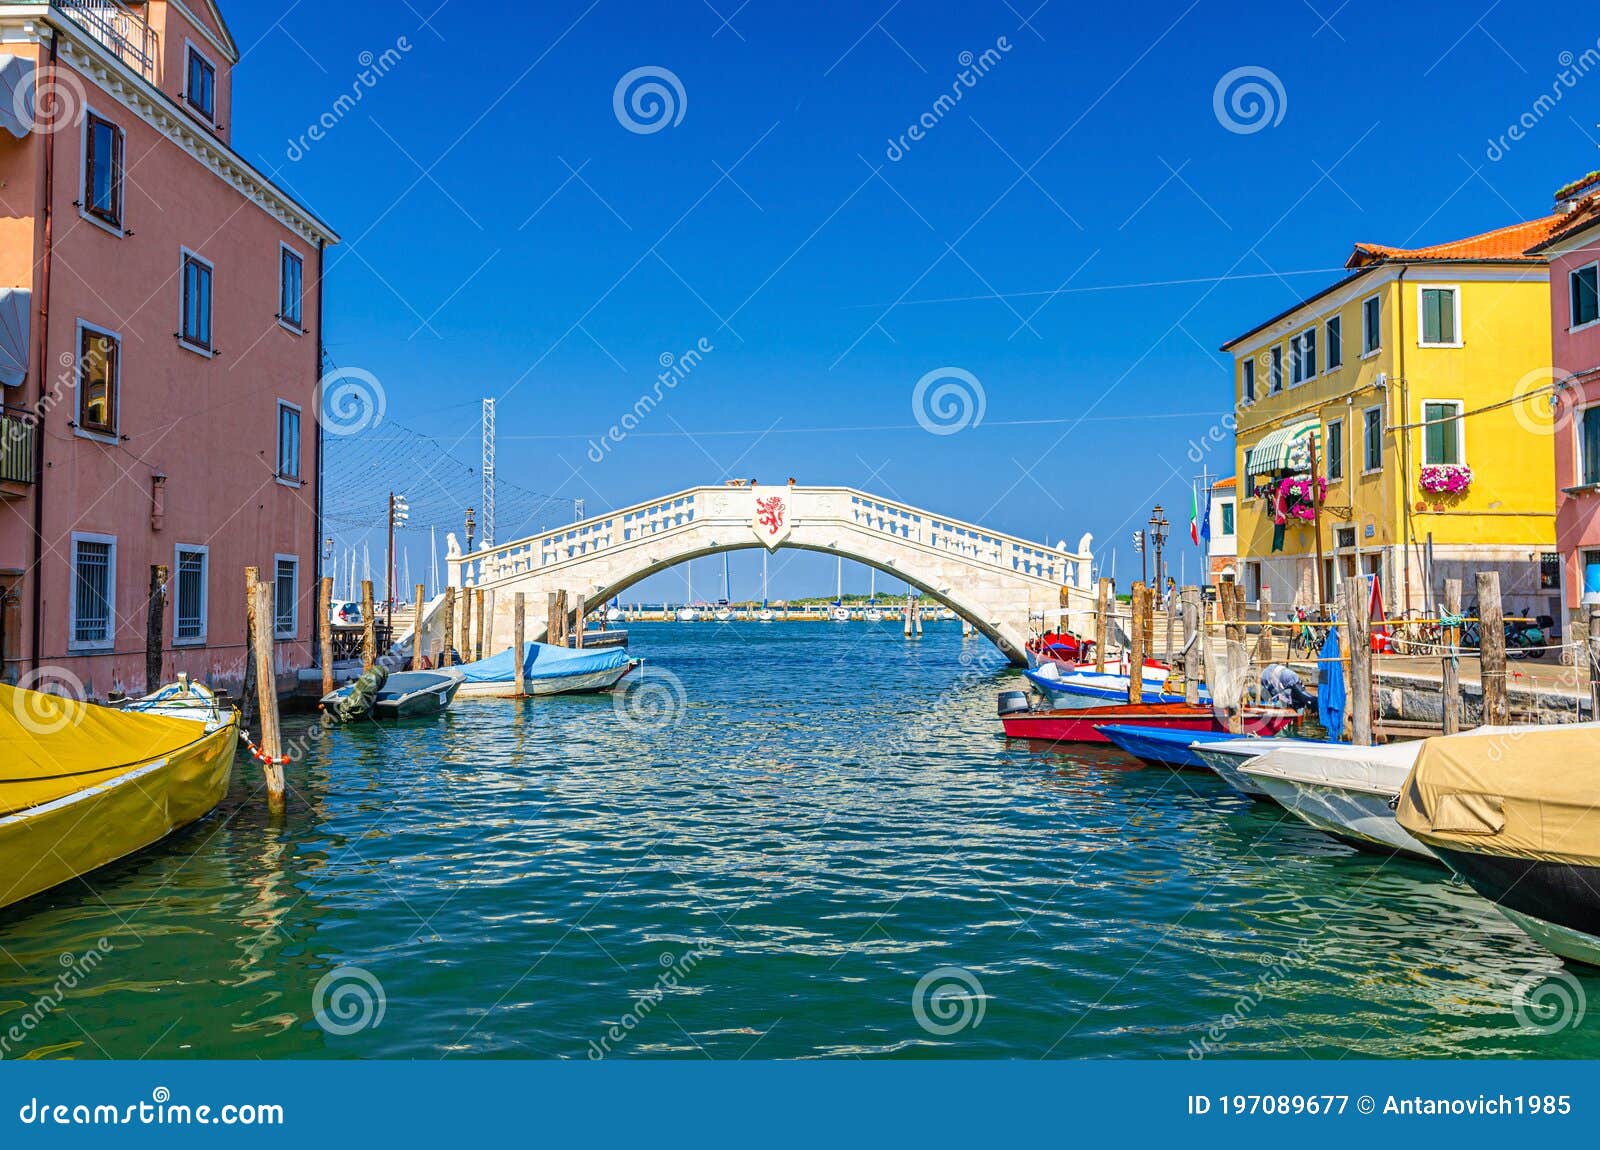 chioggia cityscape with narrow water canal vena